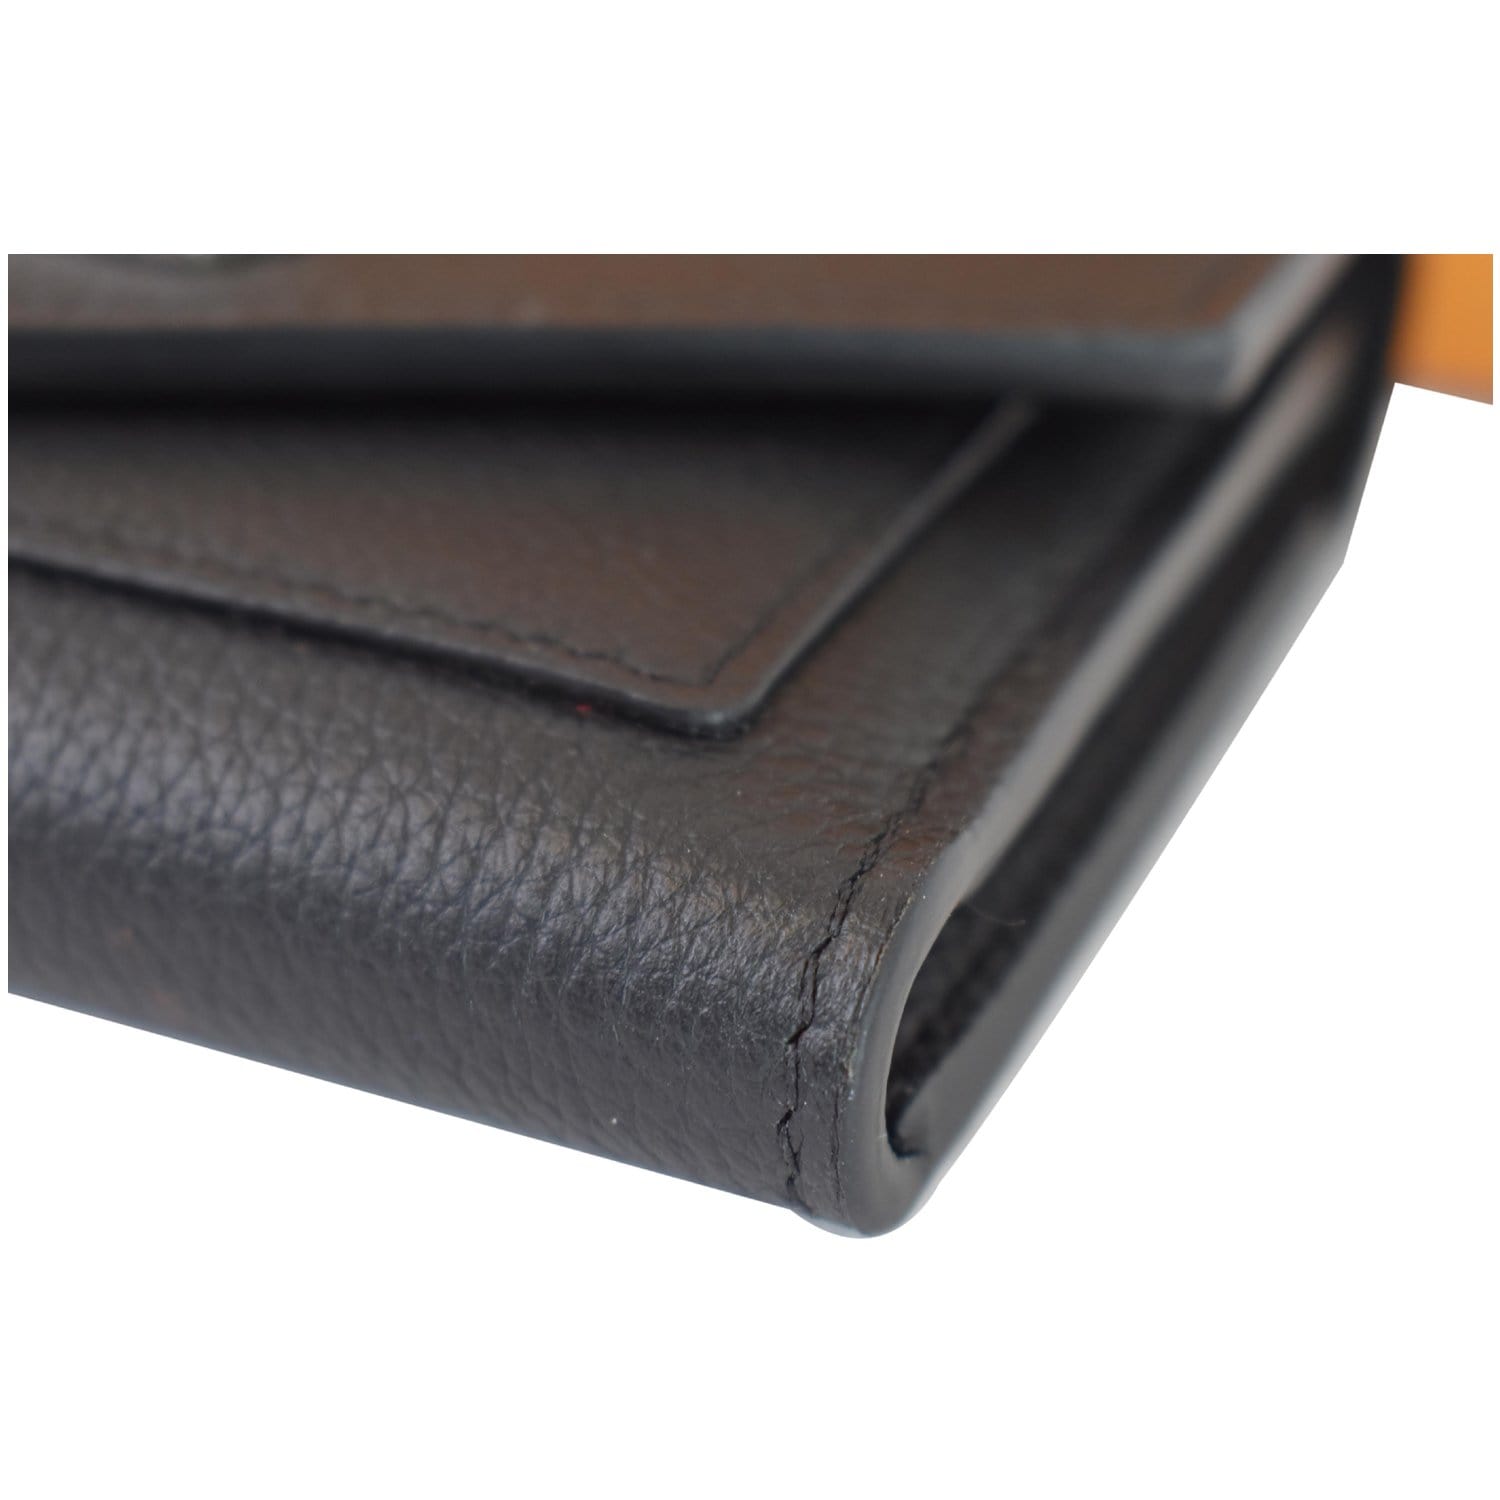 Louis Vuitton MYLOCKME Compact Wallet in Black